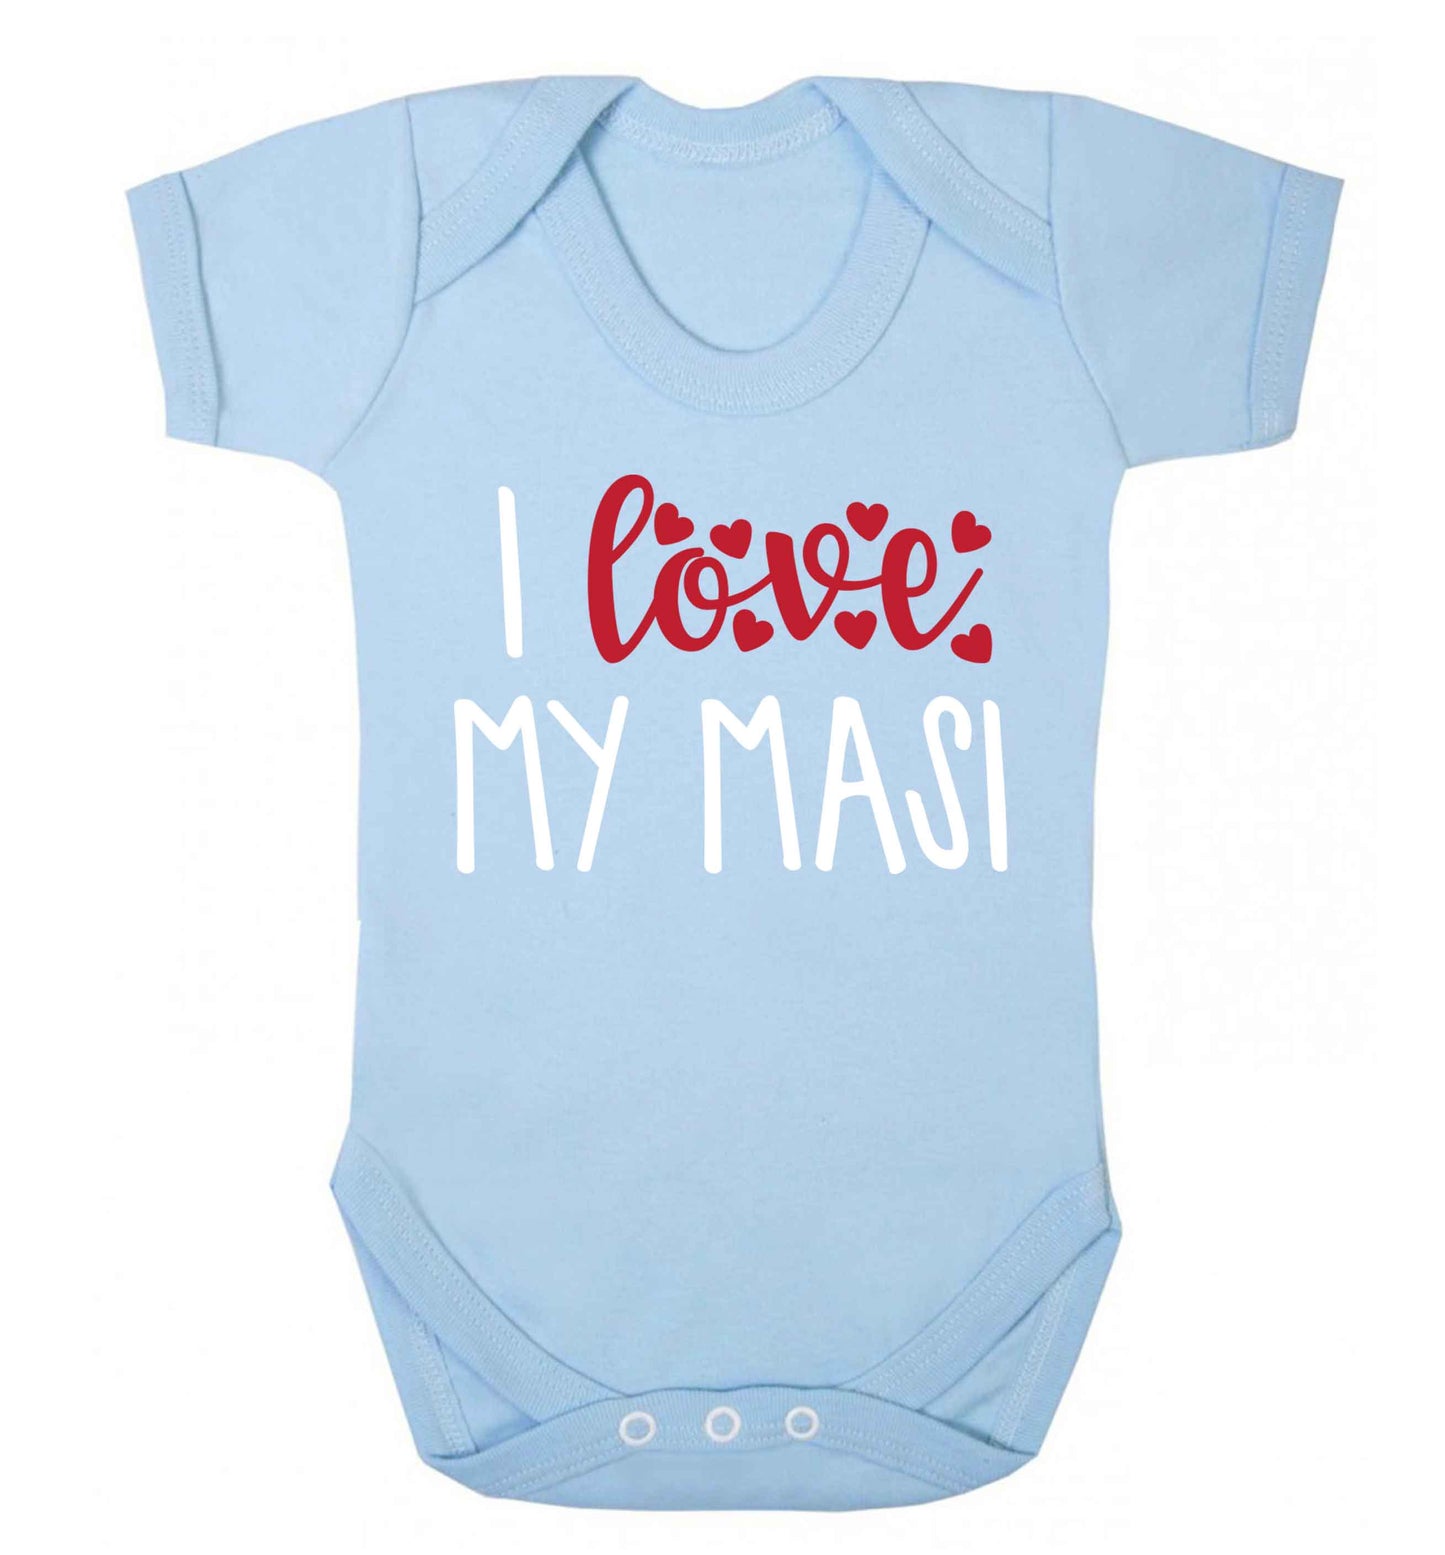 I love my masi Baby Vest pale blue 18-24 months